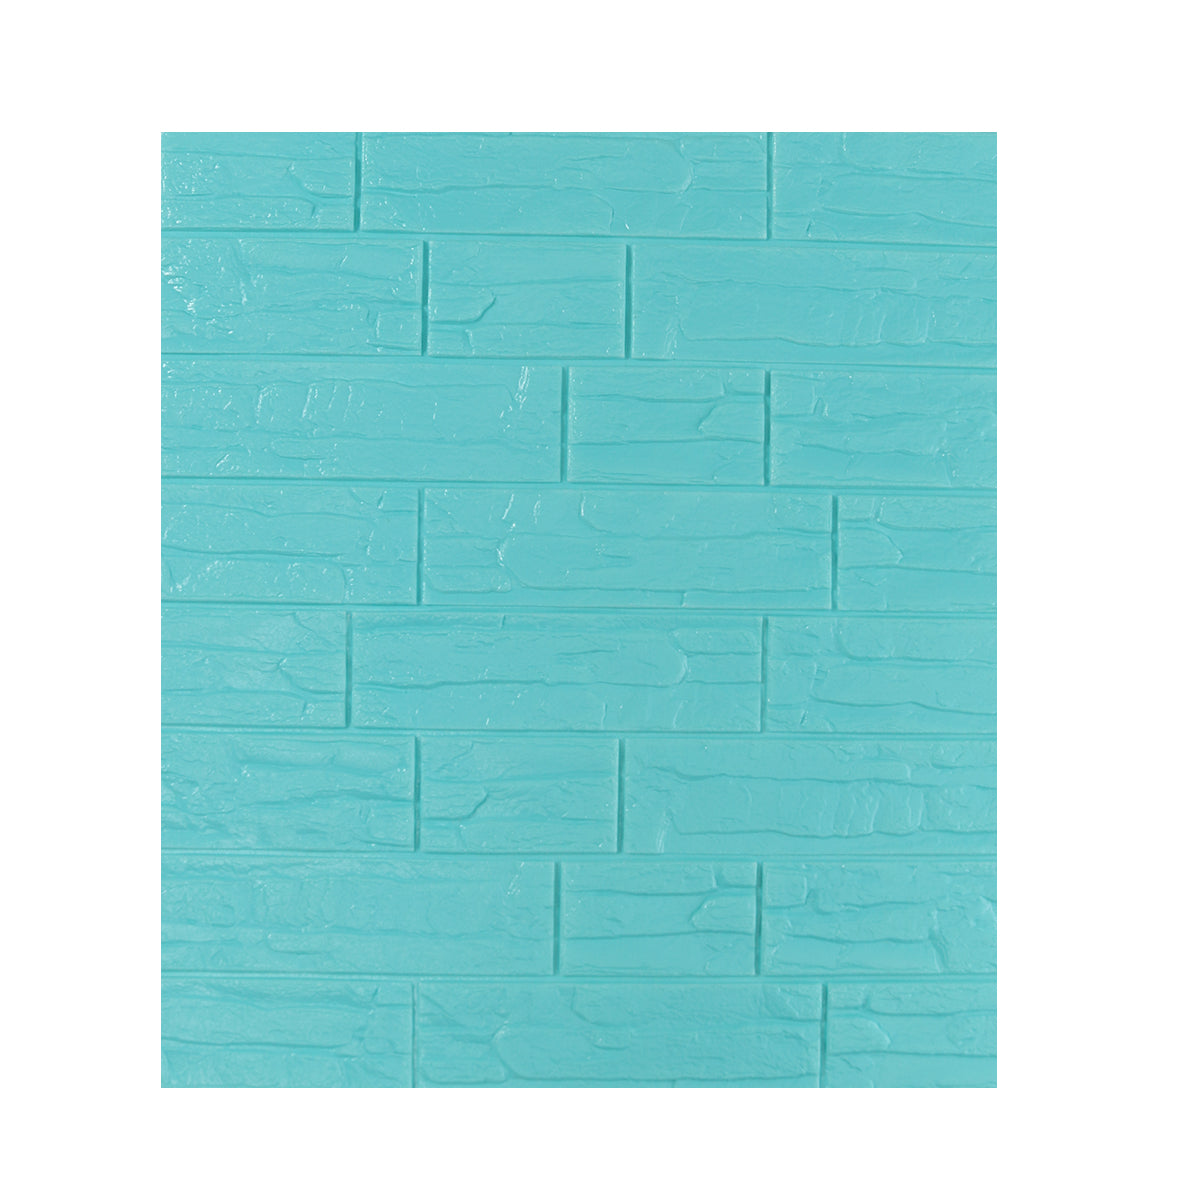 10Pcs Set 3D Brick Wall Stickers Panels Self-Adhesive Decals Bedroom Home Decoration